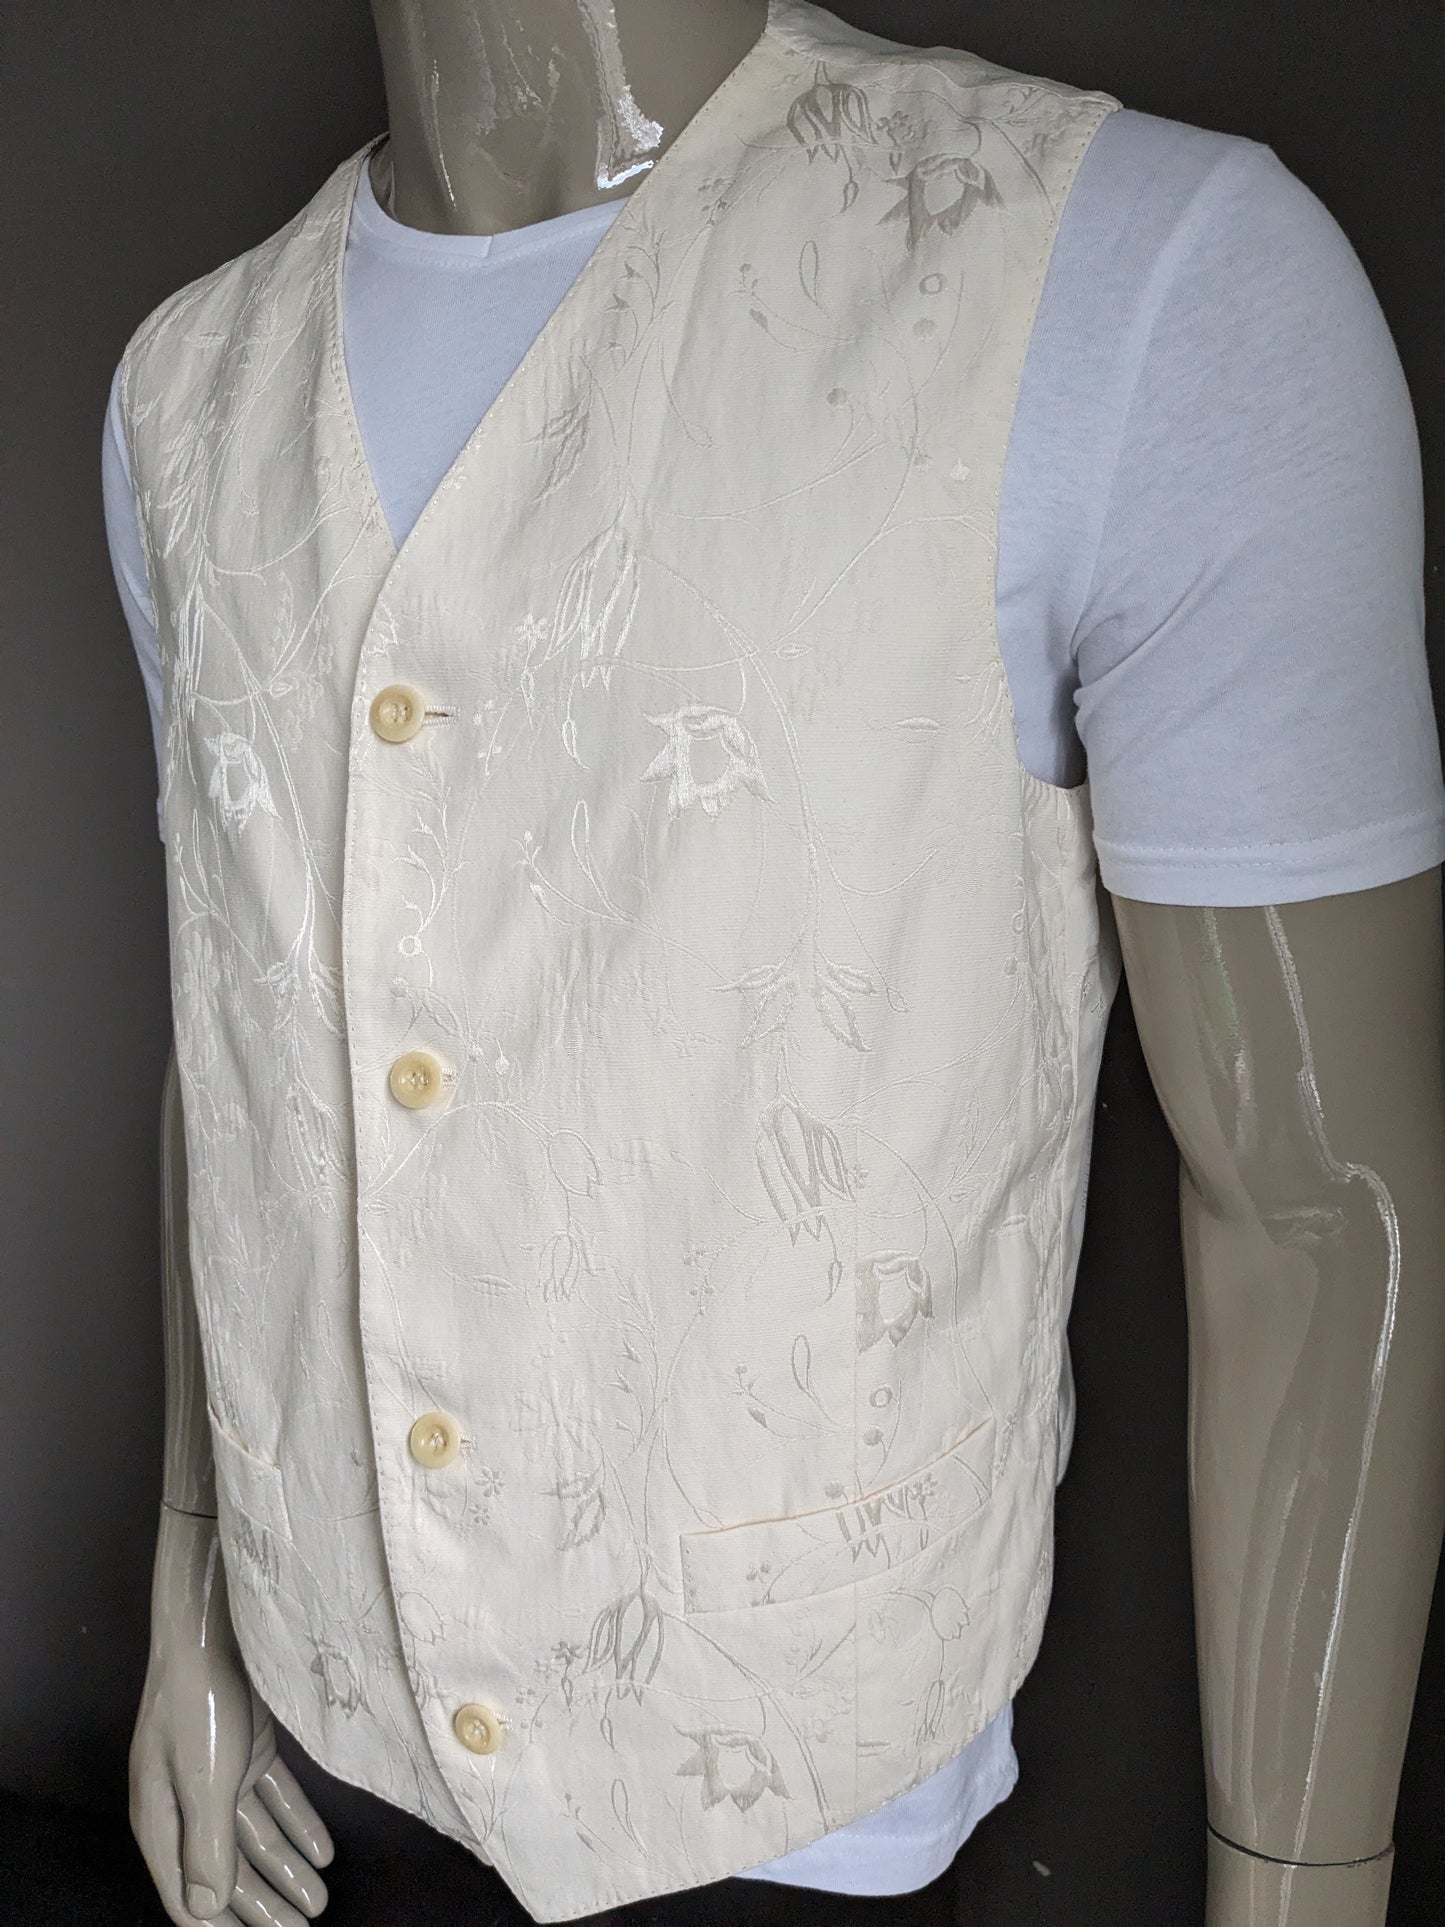 Hans Ubbink Day Day Day Wiltcoat. Motif floral beige. Taille 56 / XL.